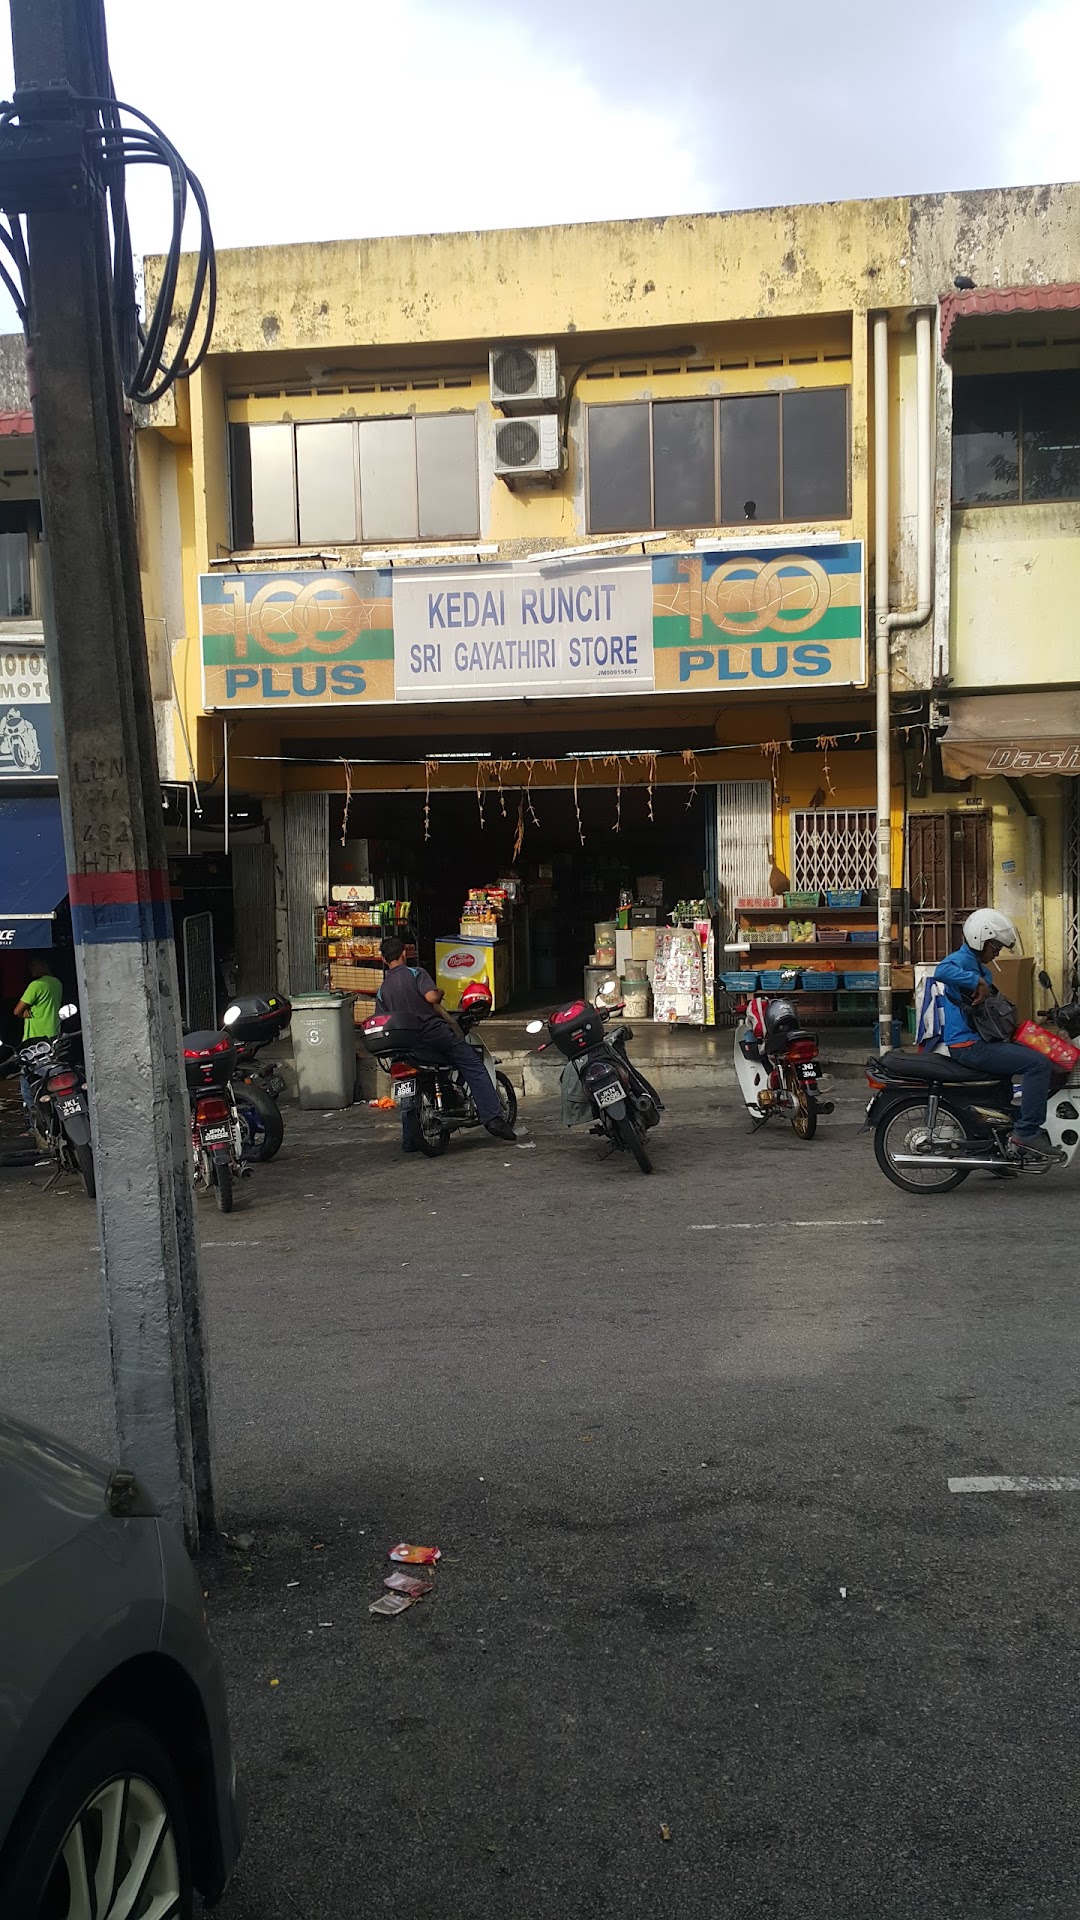 Sri Gayathiri Store